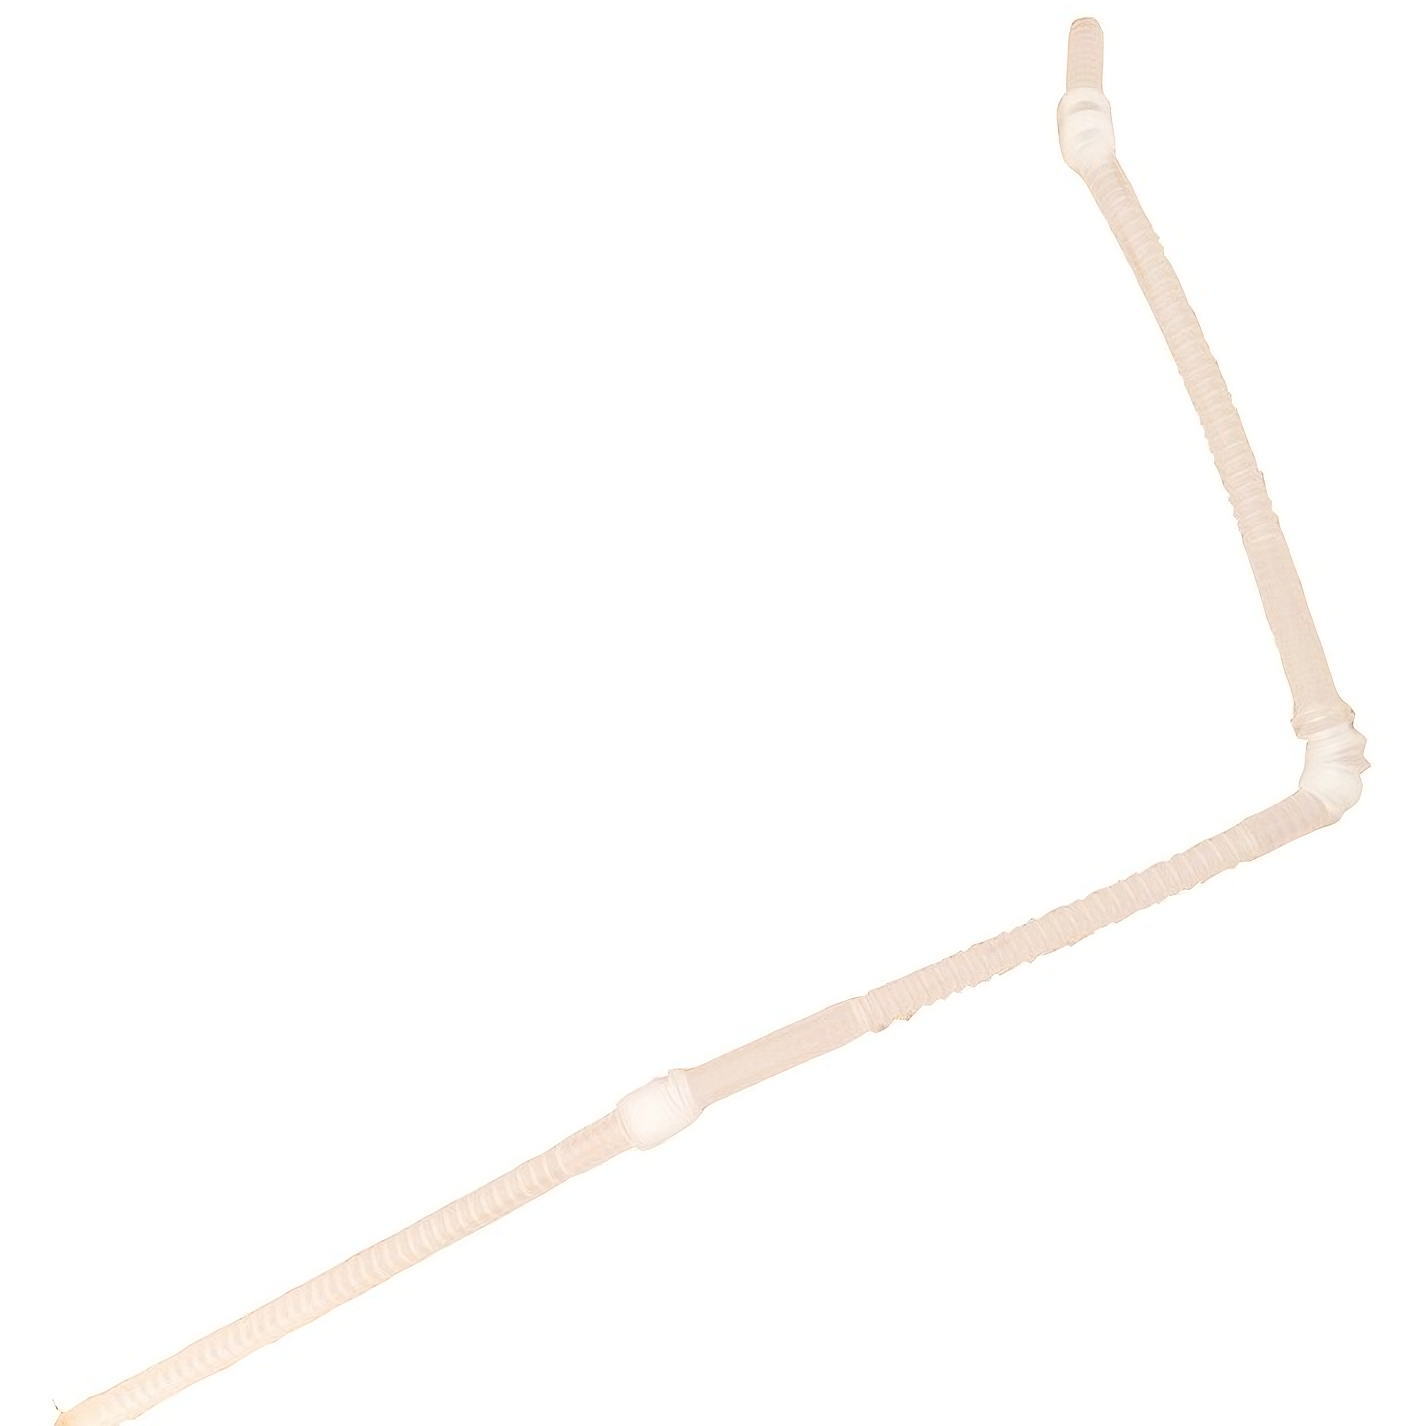 Super Long Flexible Drinking Straws 10 Pack